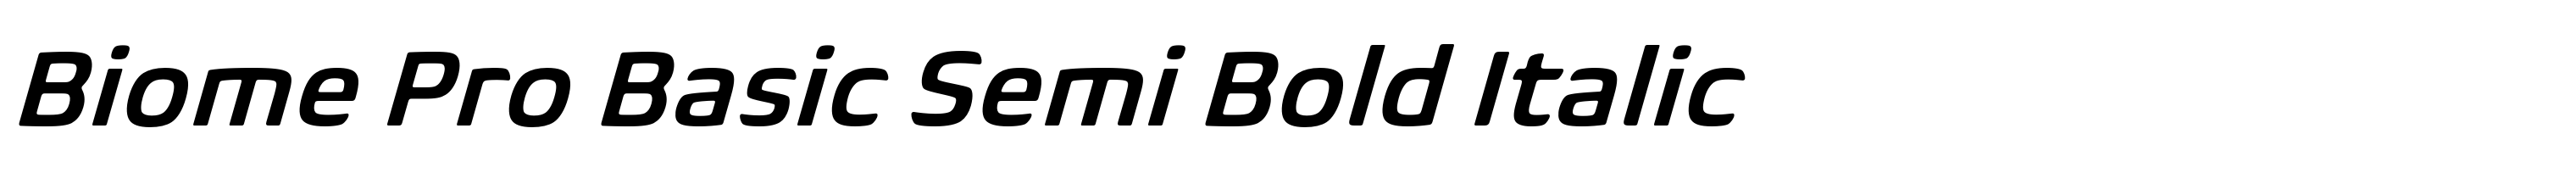 Biome Pro Basic Semi Bold Italic